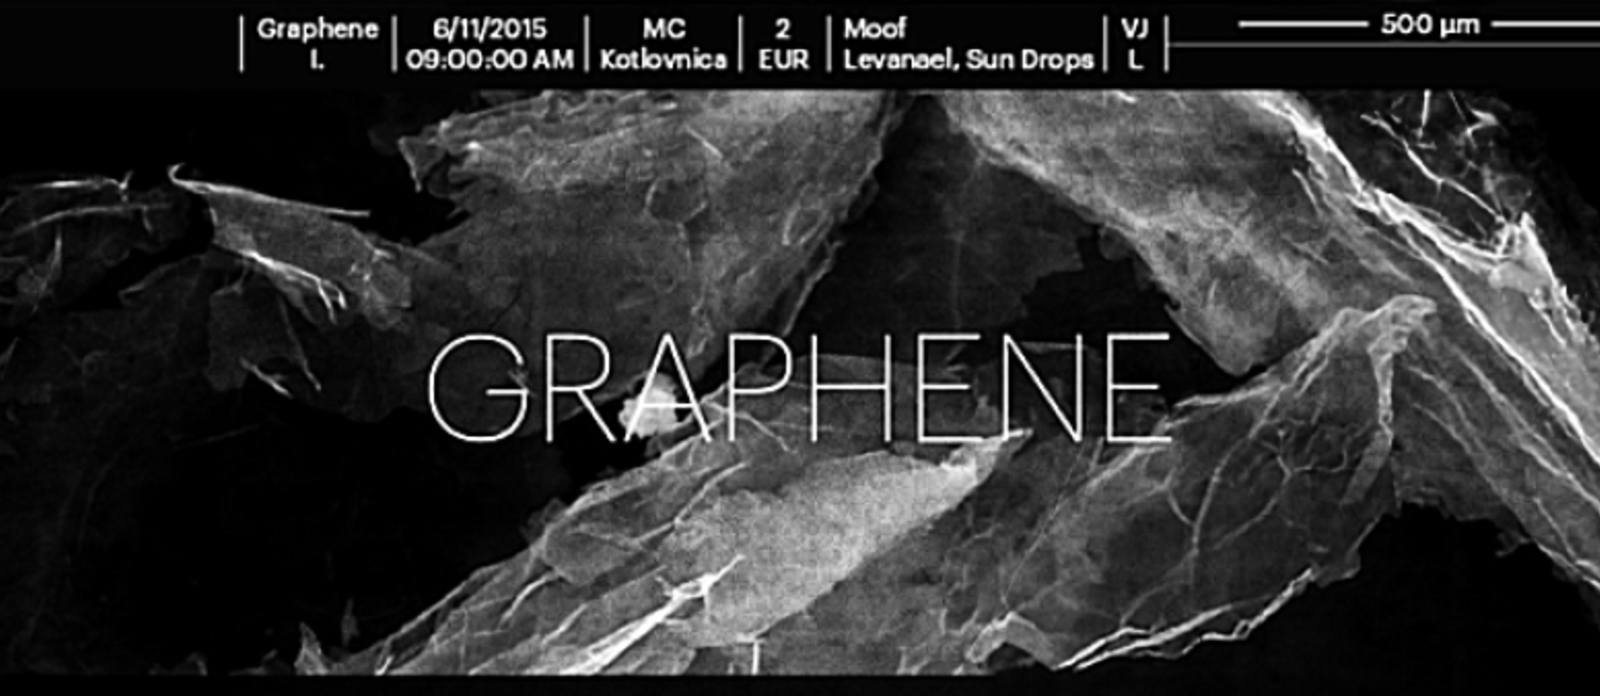 Graphene w/ Moof, Levanael & Sun Drops